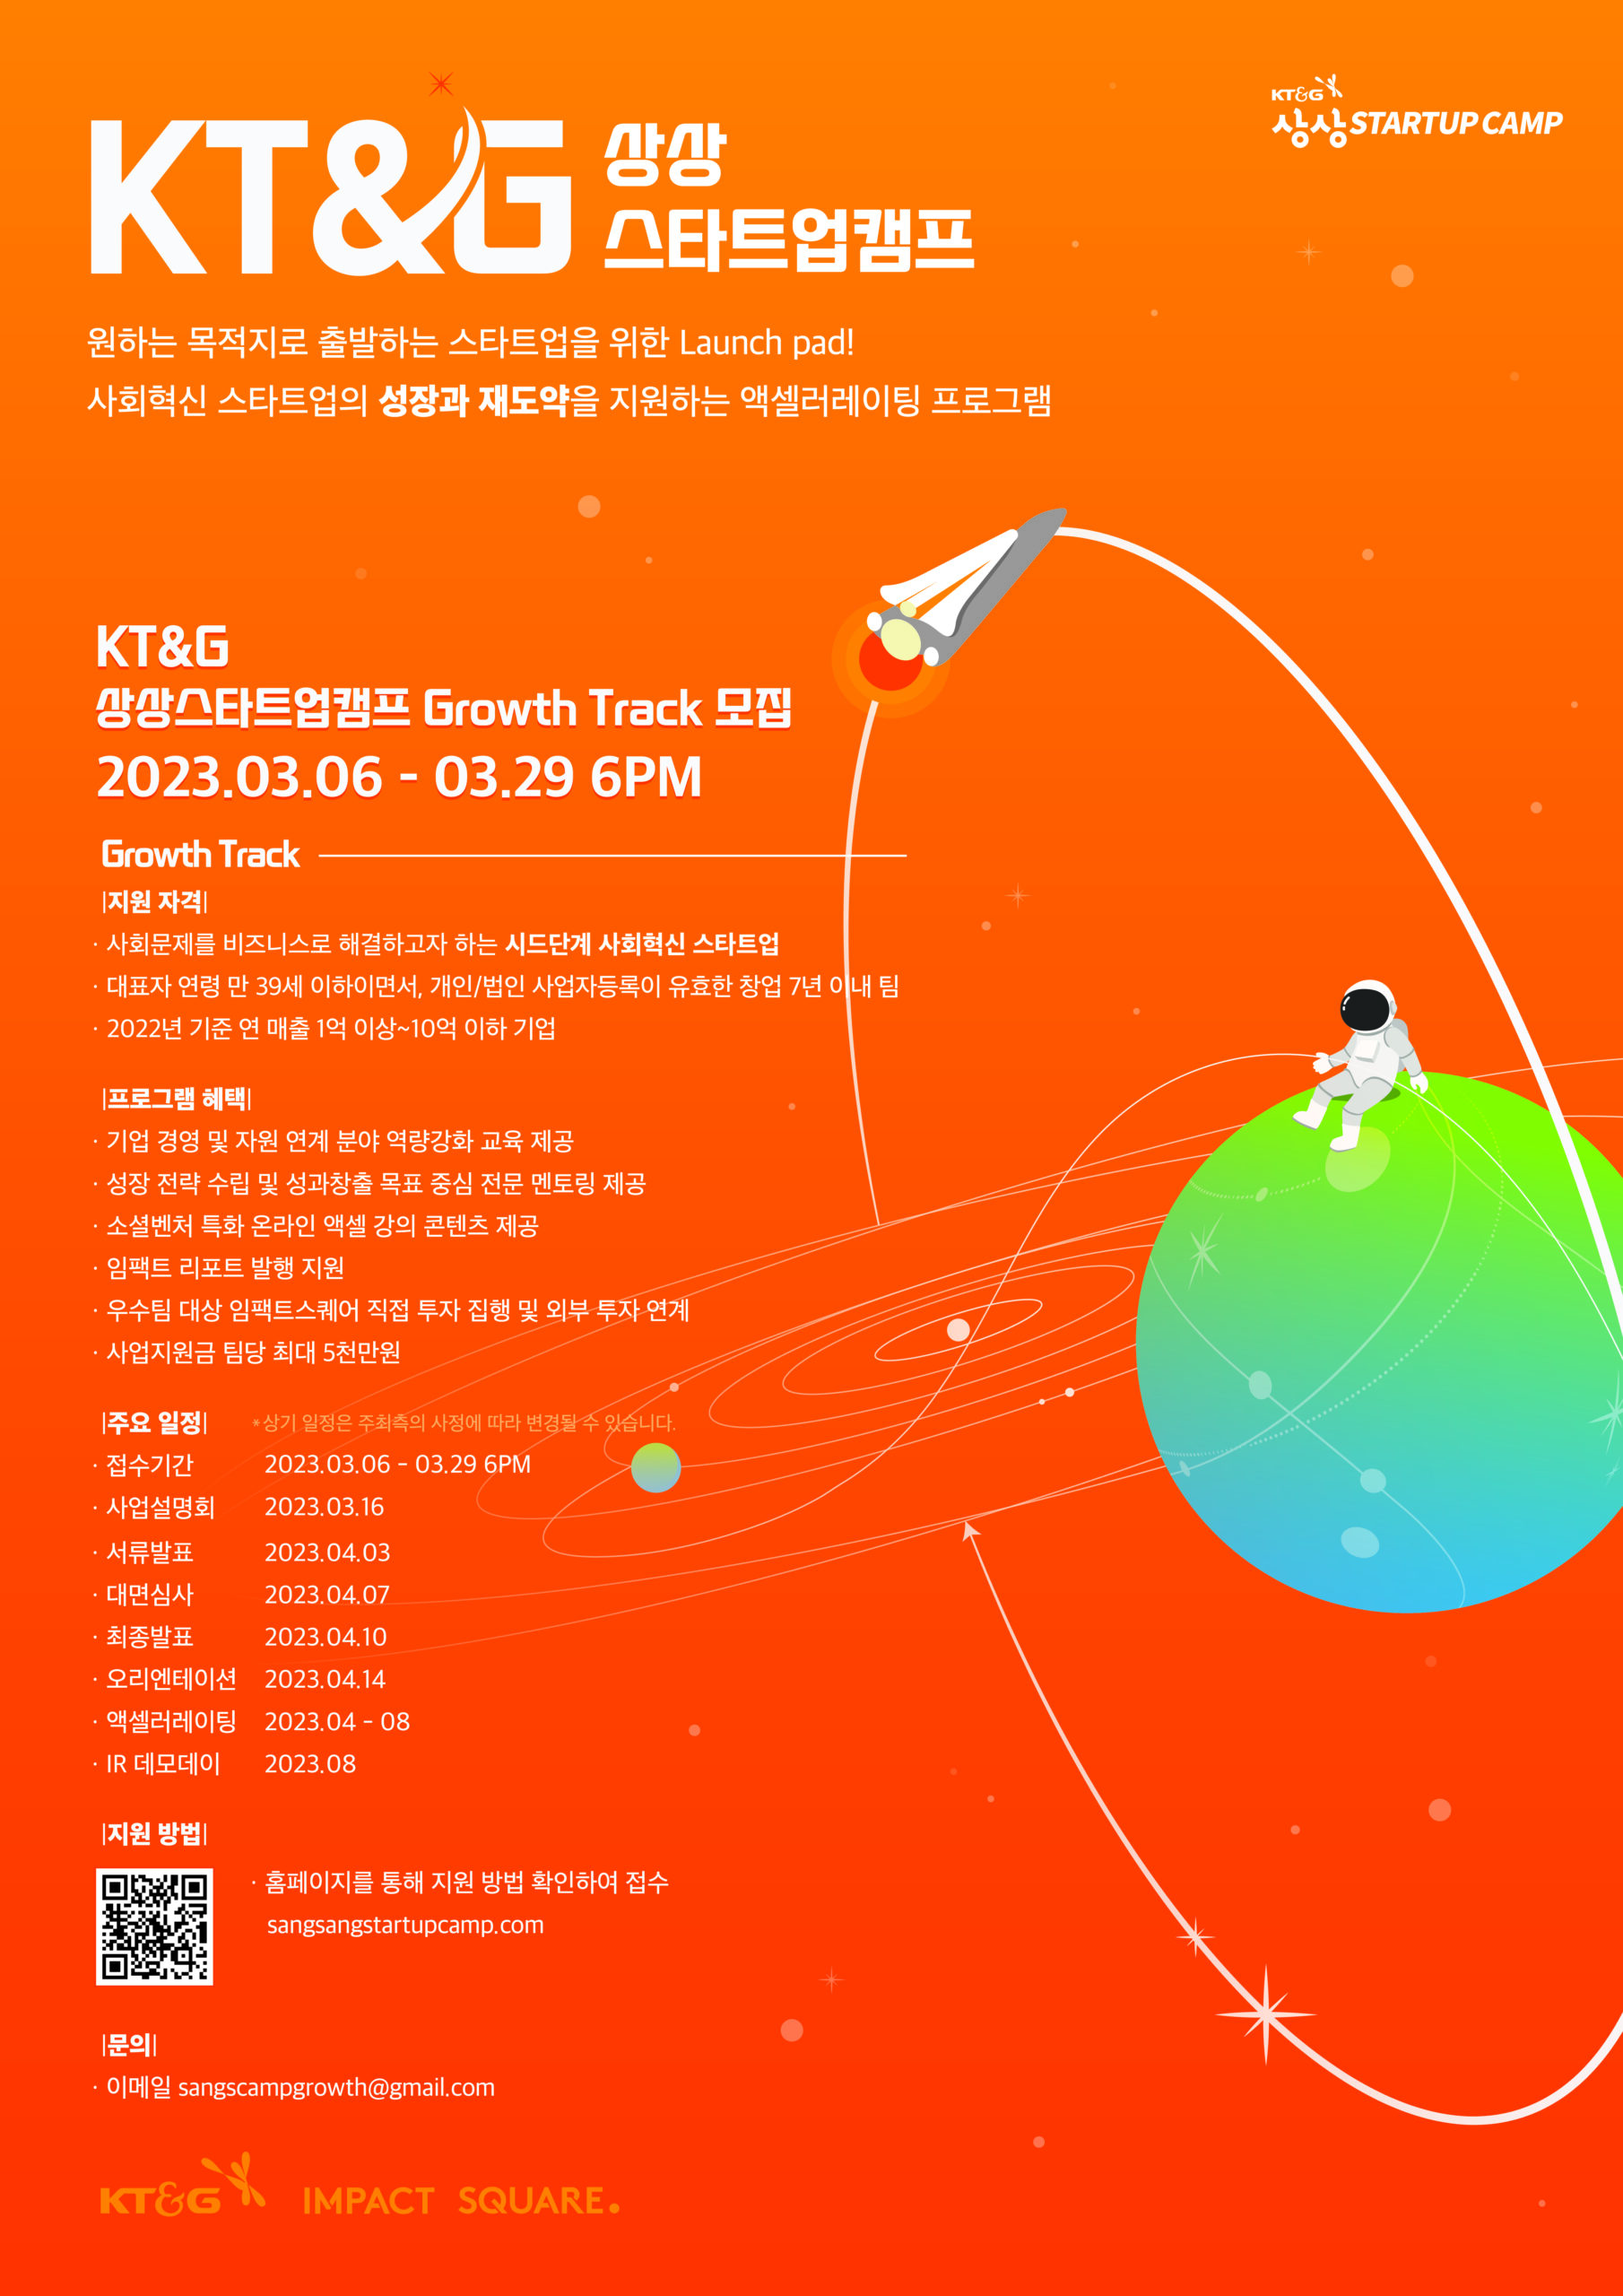 ‘KT&G 상상스타트업캠프’ 7기 Growth Track의 참여기업 모집